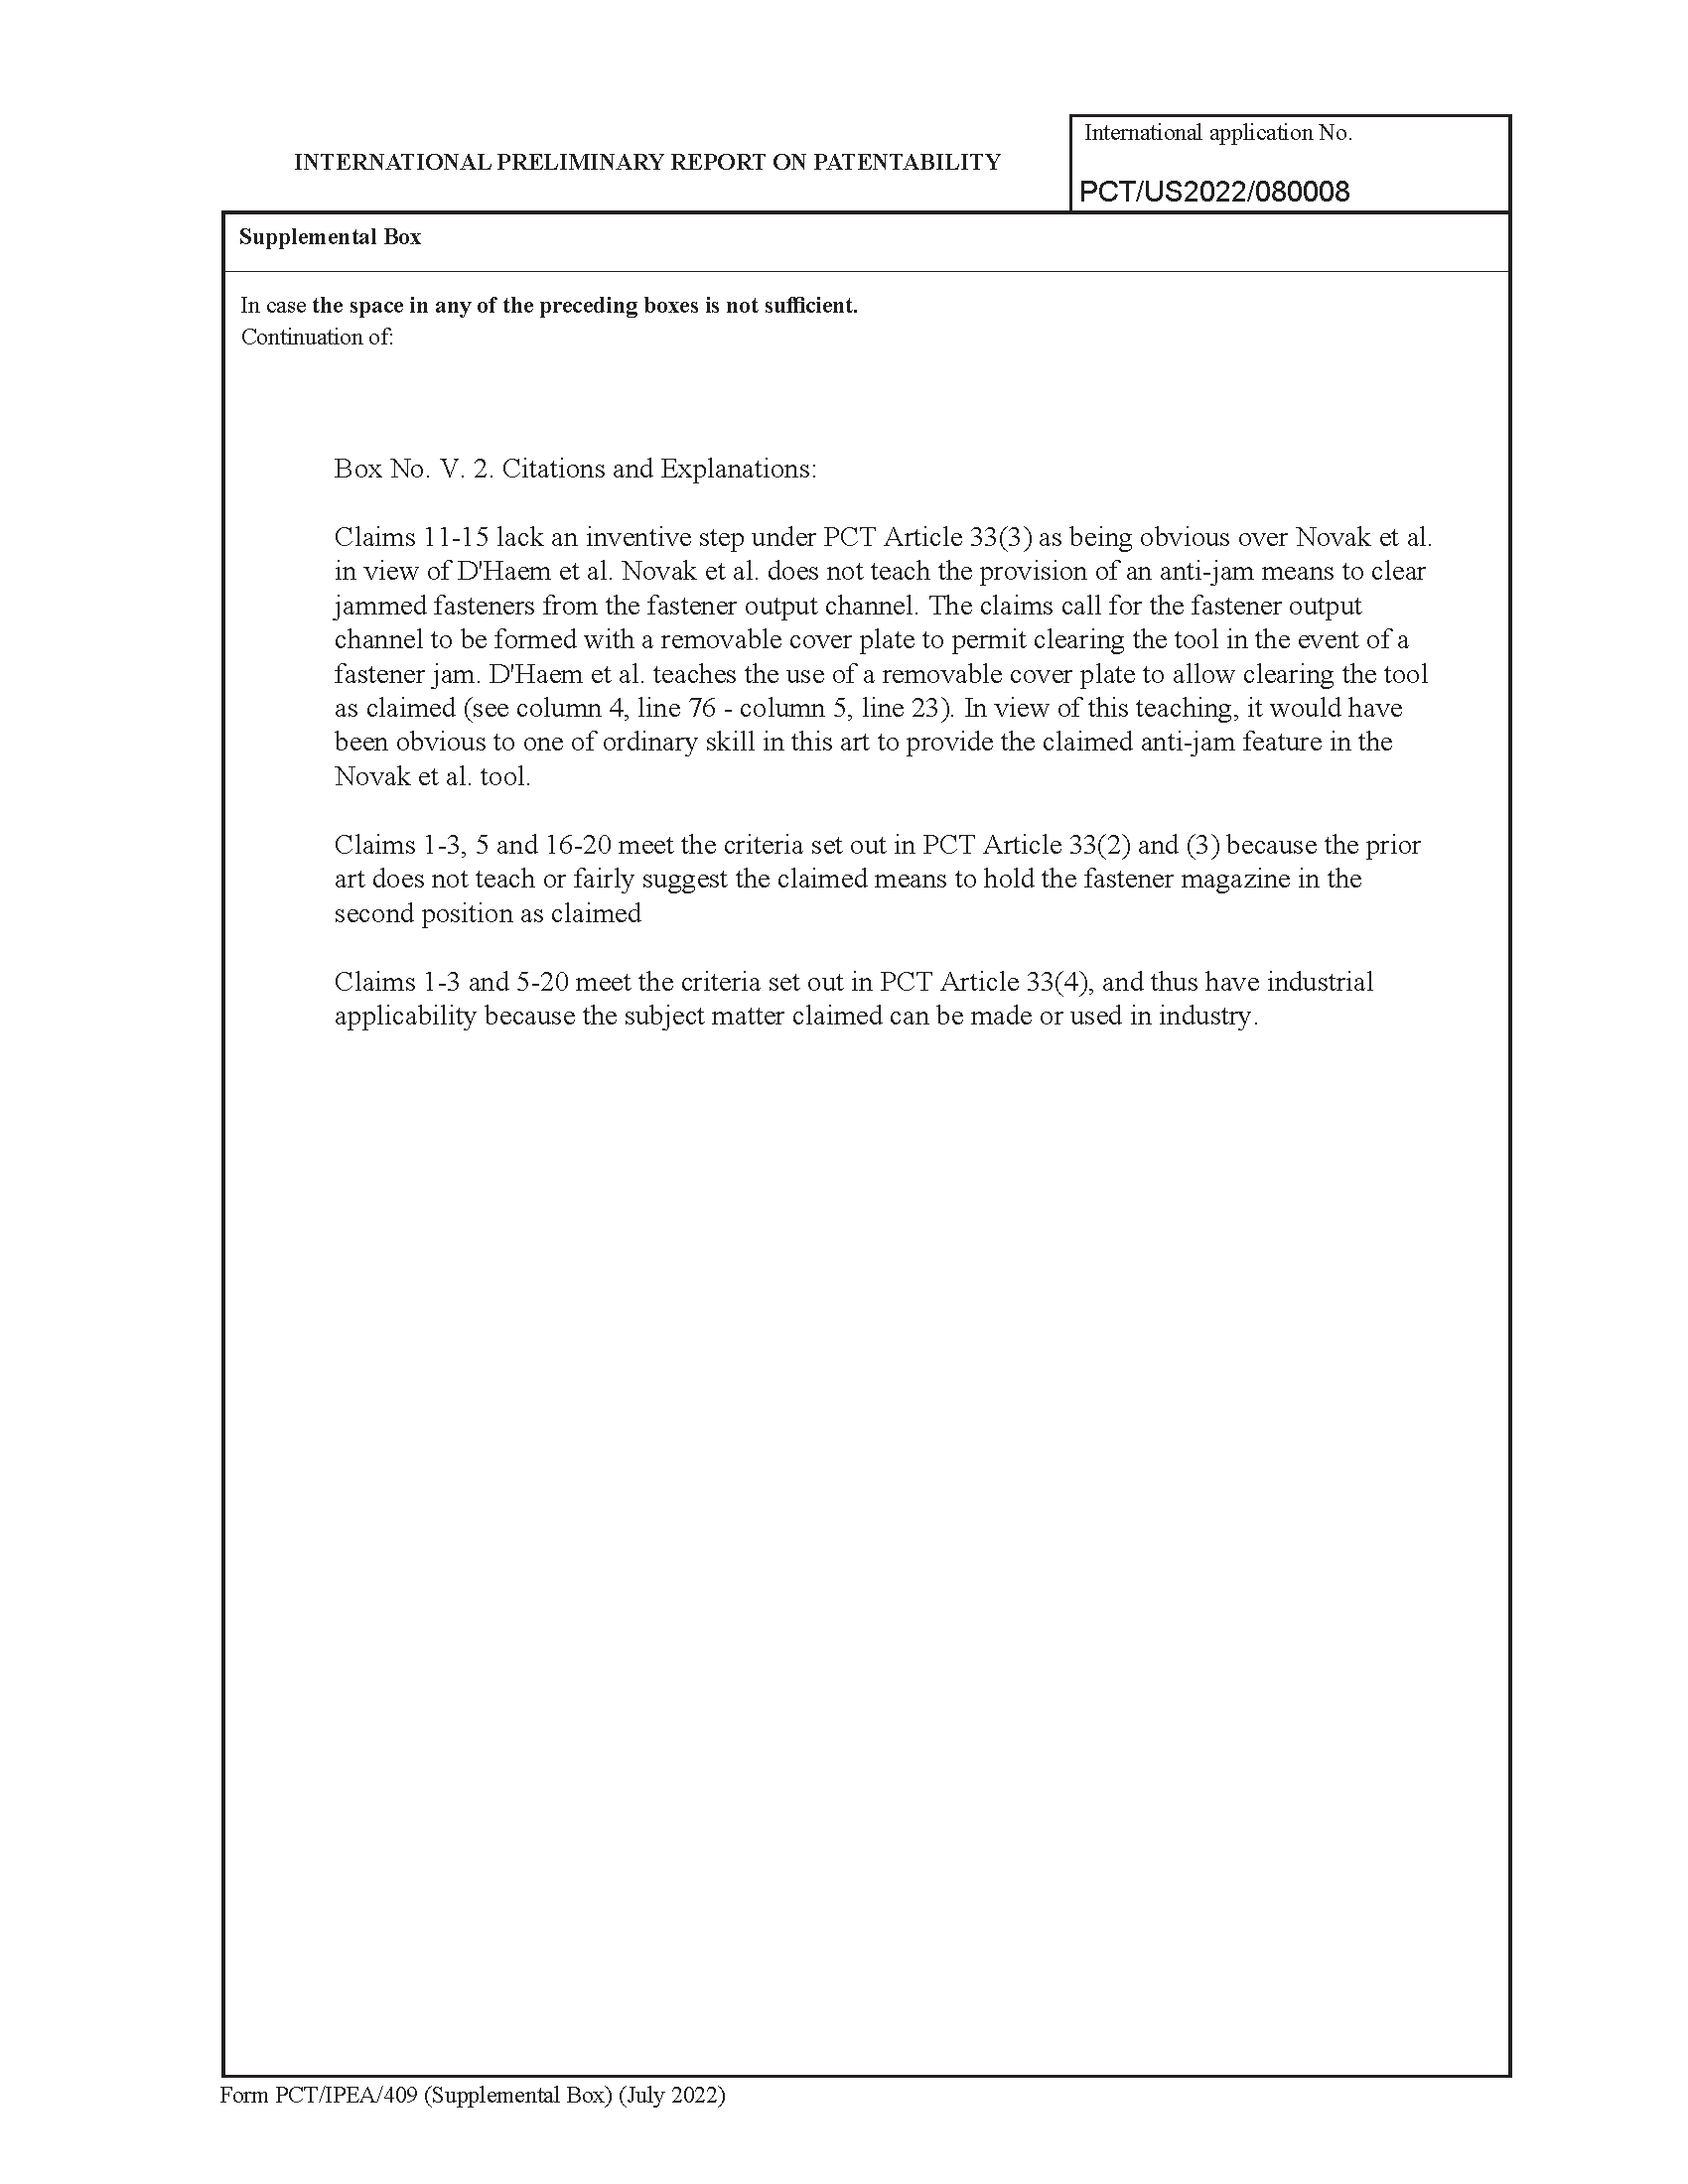 Form PCT/IPEA/409 (Supplemental Box) (July 2014)